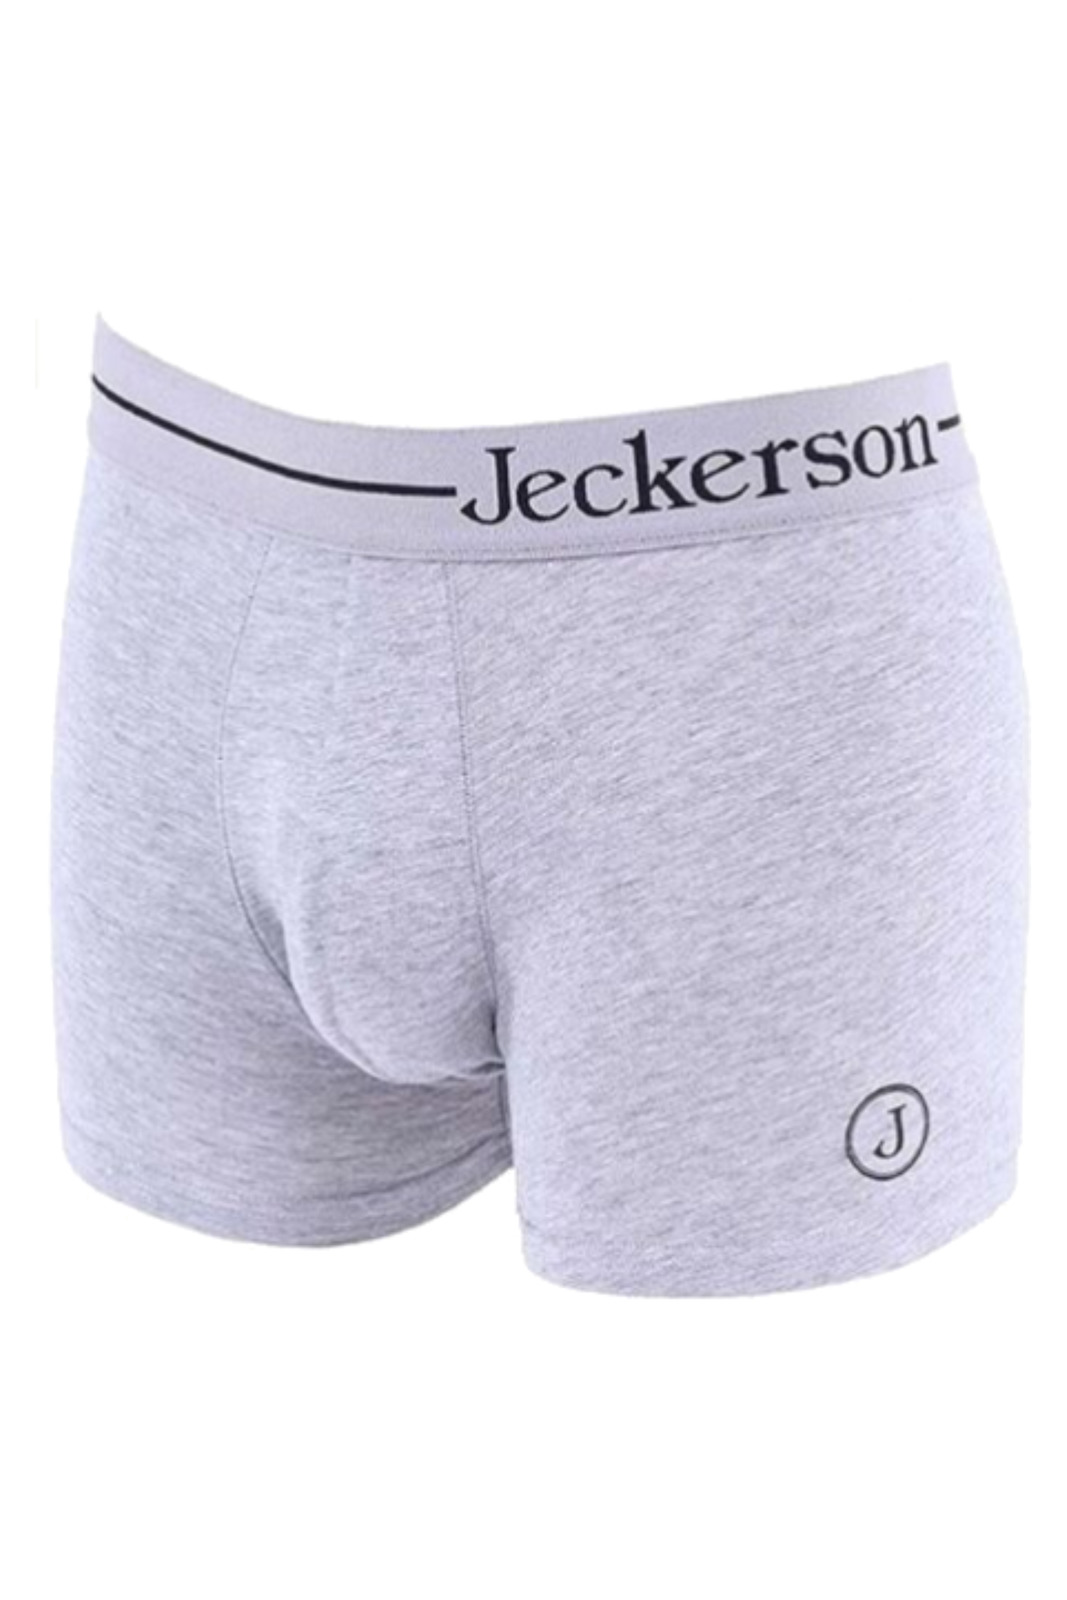 Jeckerson Grey Boxers for Men - P20P00UIN002